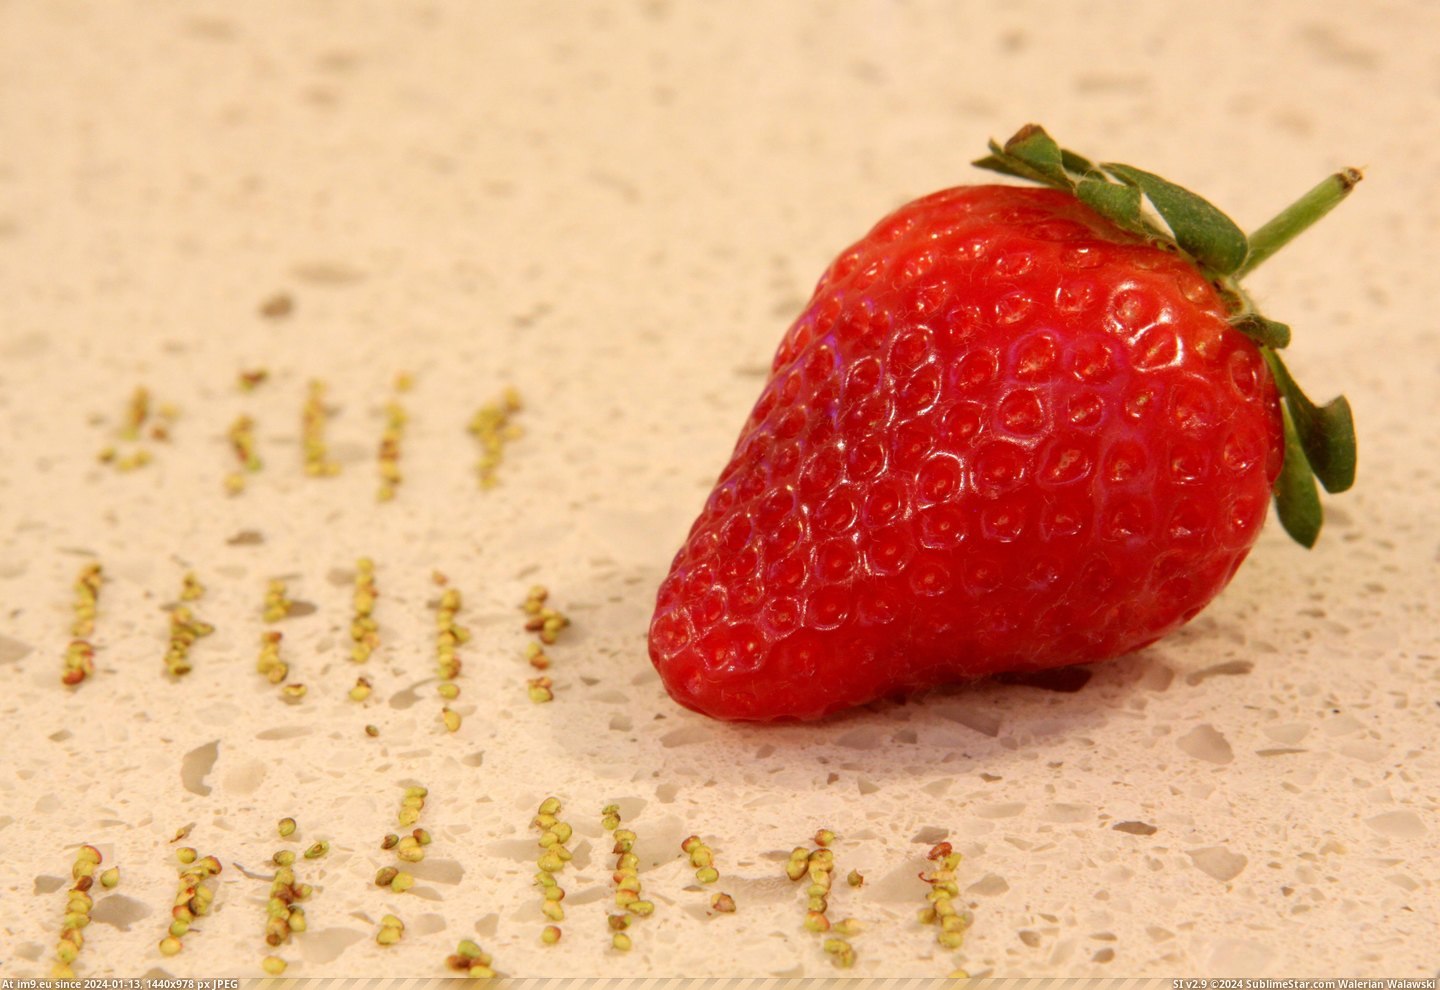 #Strawberry  #Seeds [Mildlyinteresting] This strawberry had 204 seeds. 1 Pic. (Изображение из альбом My r/MILDLYINTERESTING favs))